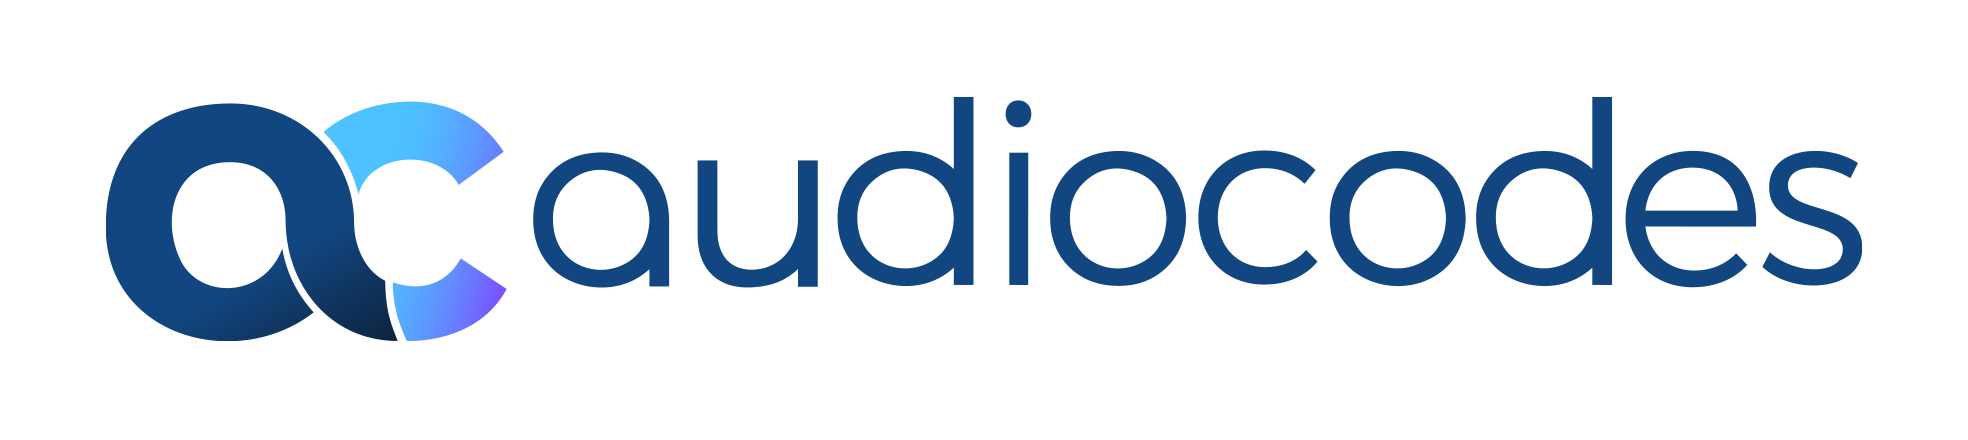 audiocodes-logo-